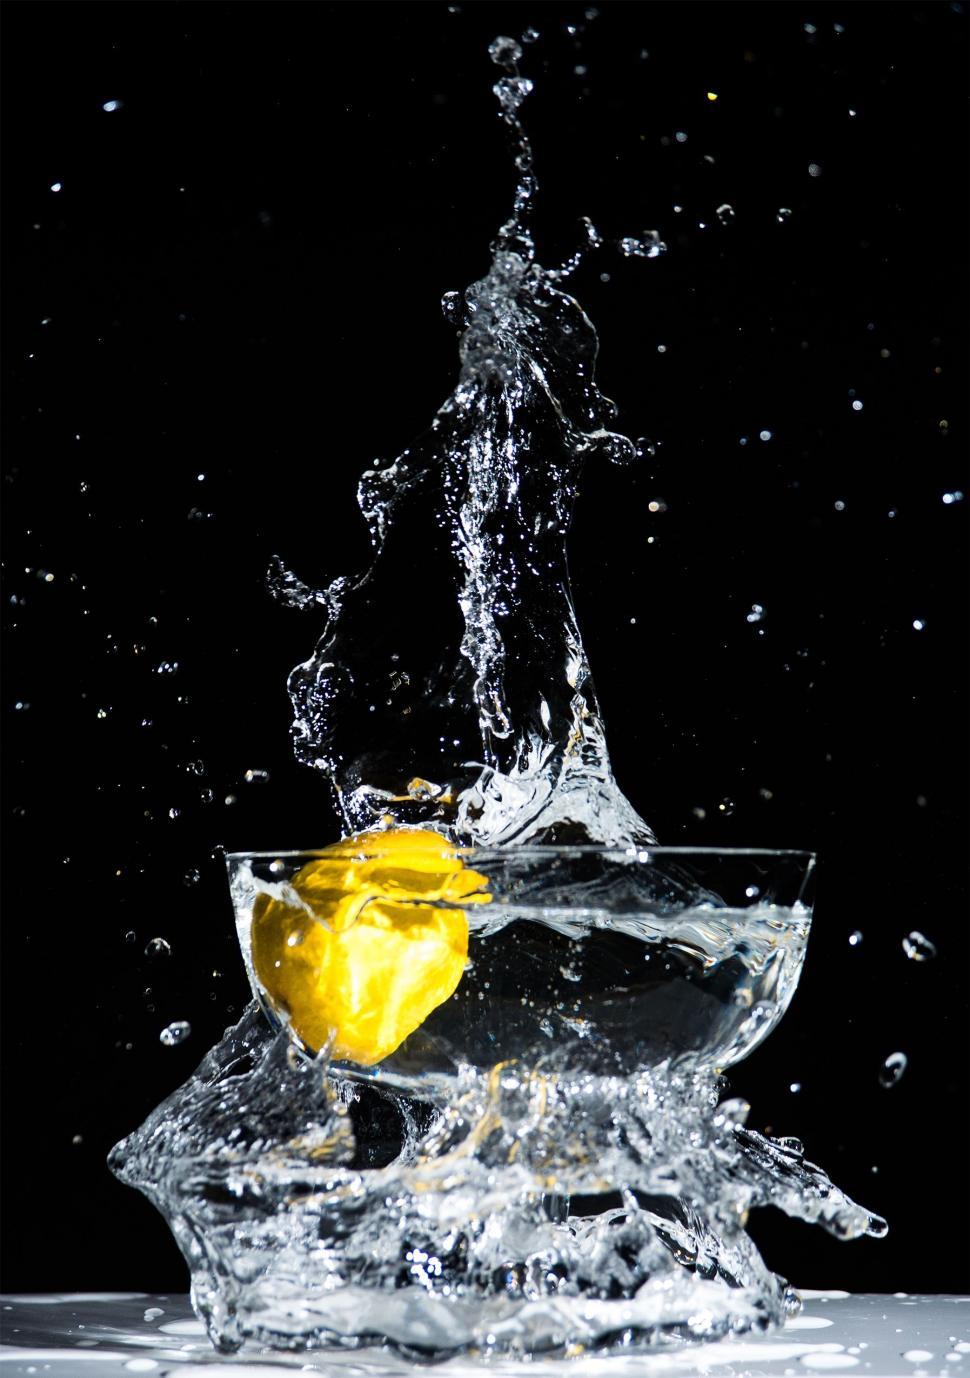 Free Image of Apple Splashing Into Glass of Water 